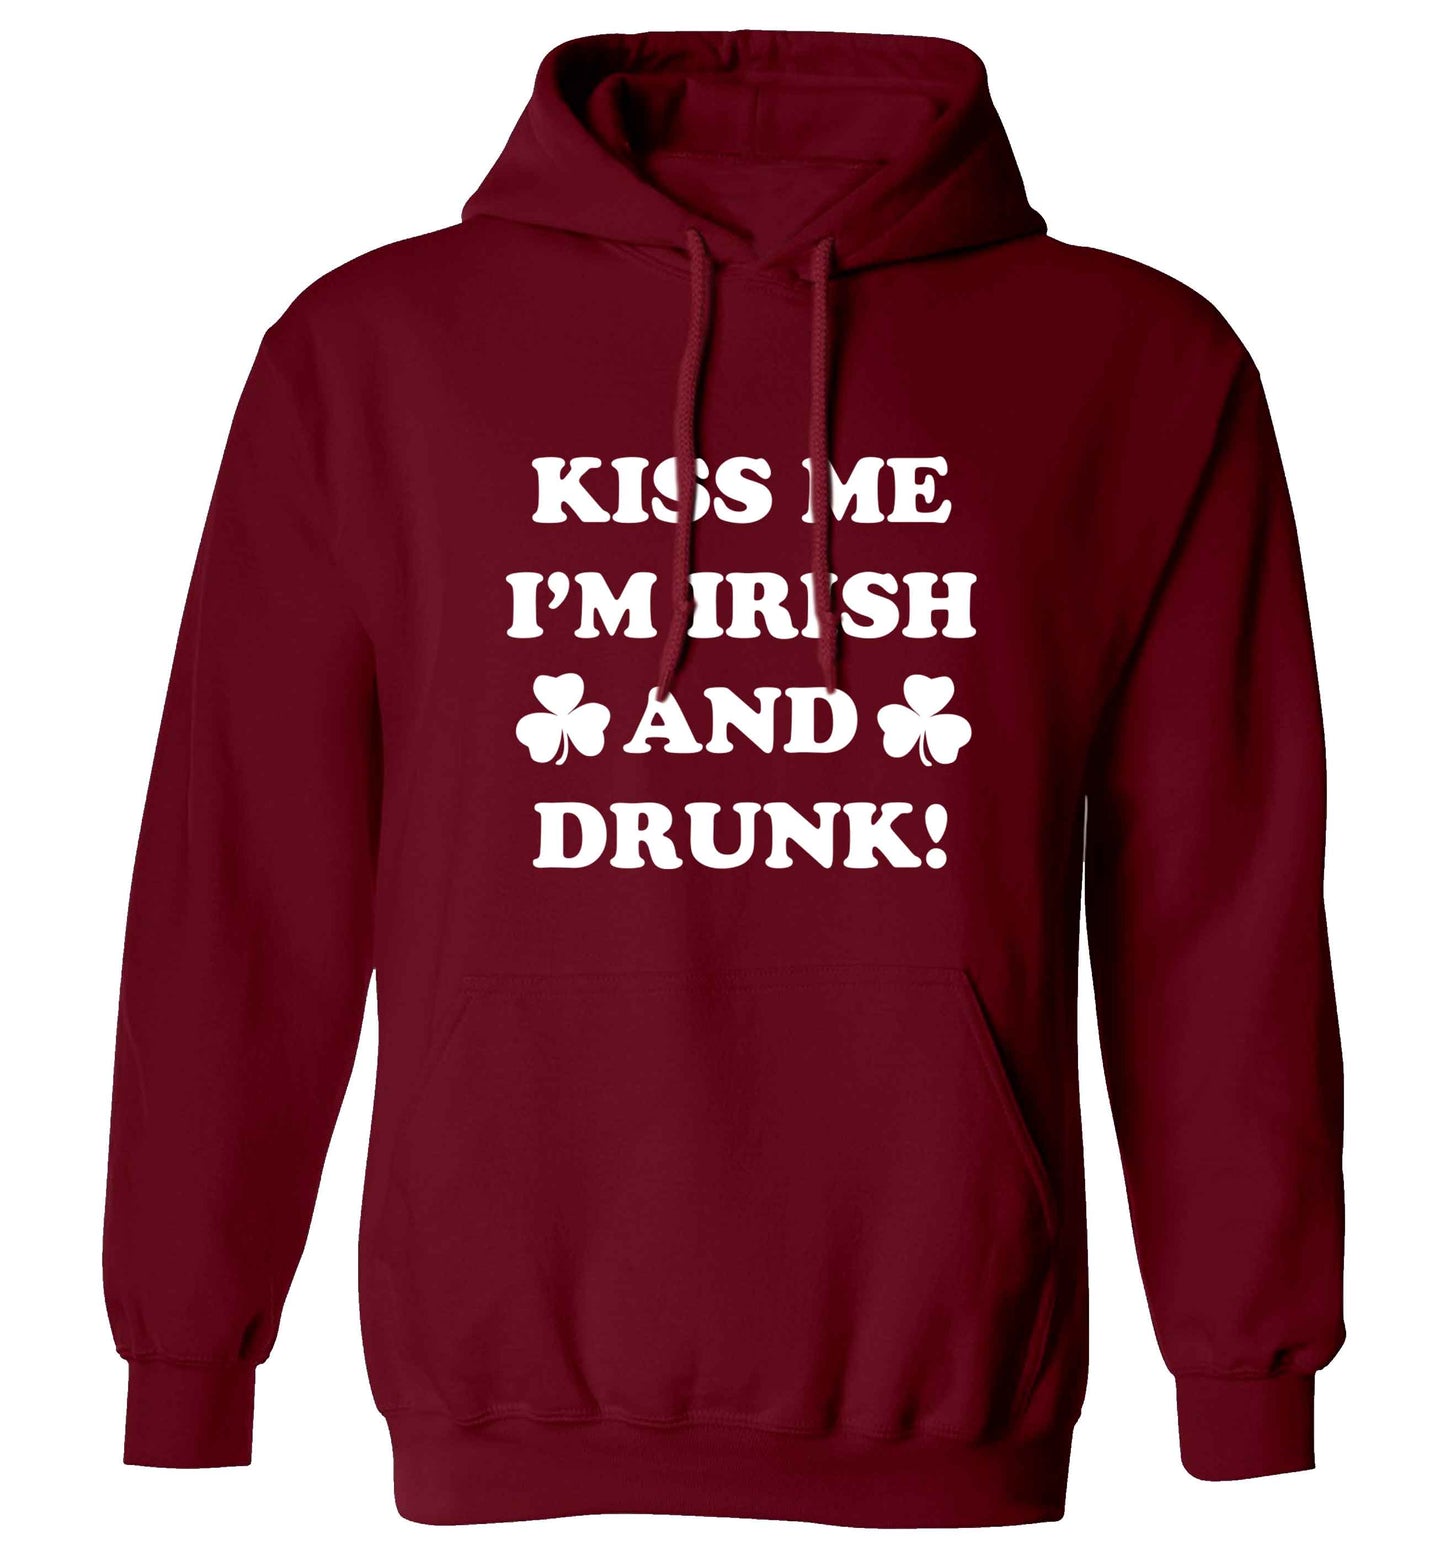 Kiss me I'm Irish and drunk adults unisex maroon hoodie 2XL